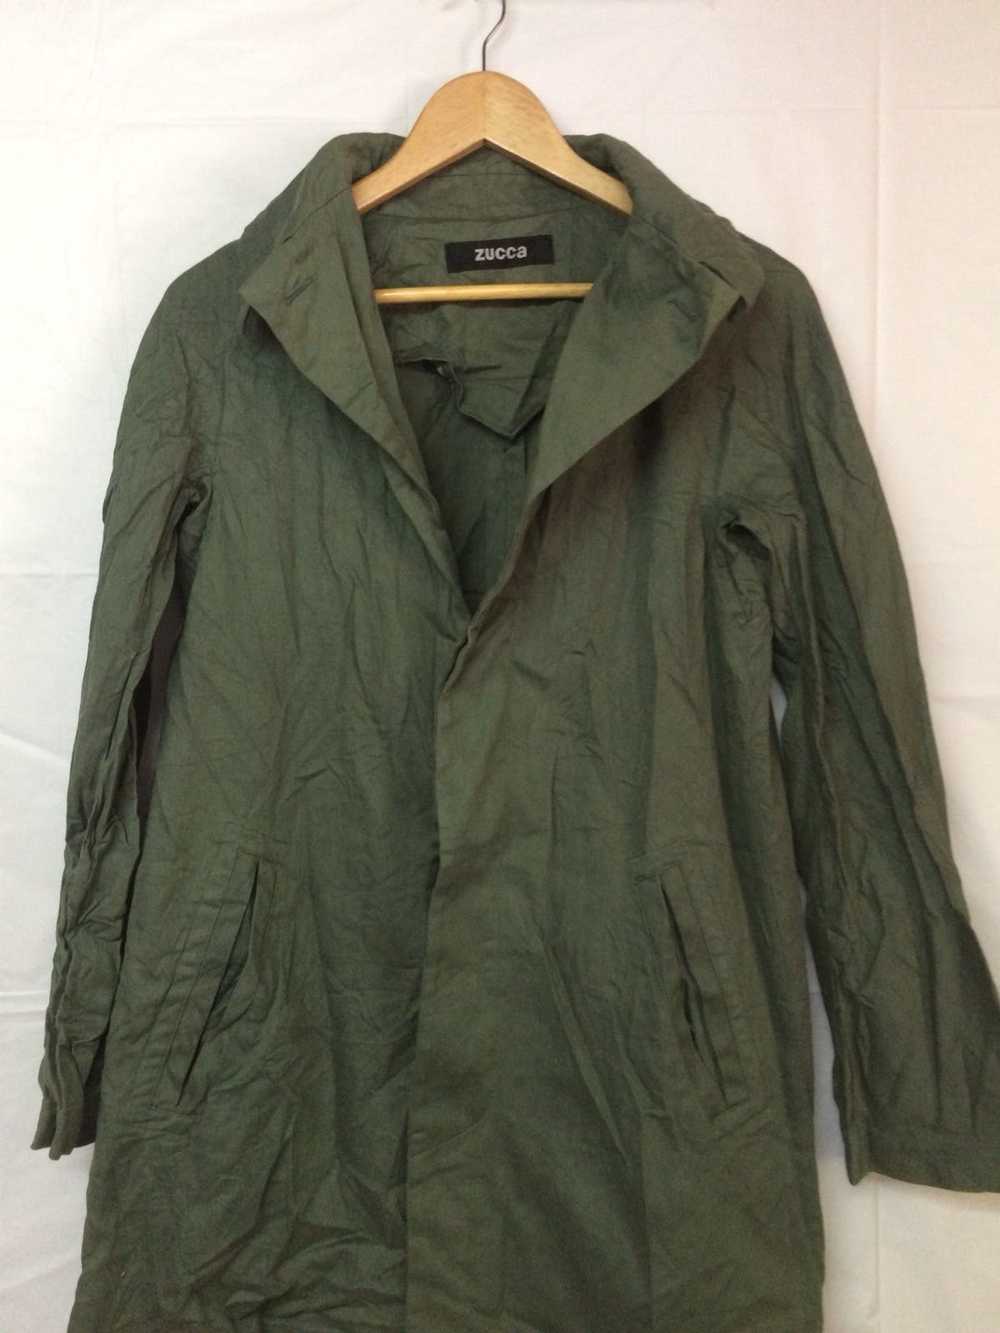 Japanese Brand Rare Vintage 80s Zucca jacket - image 6